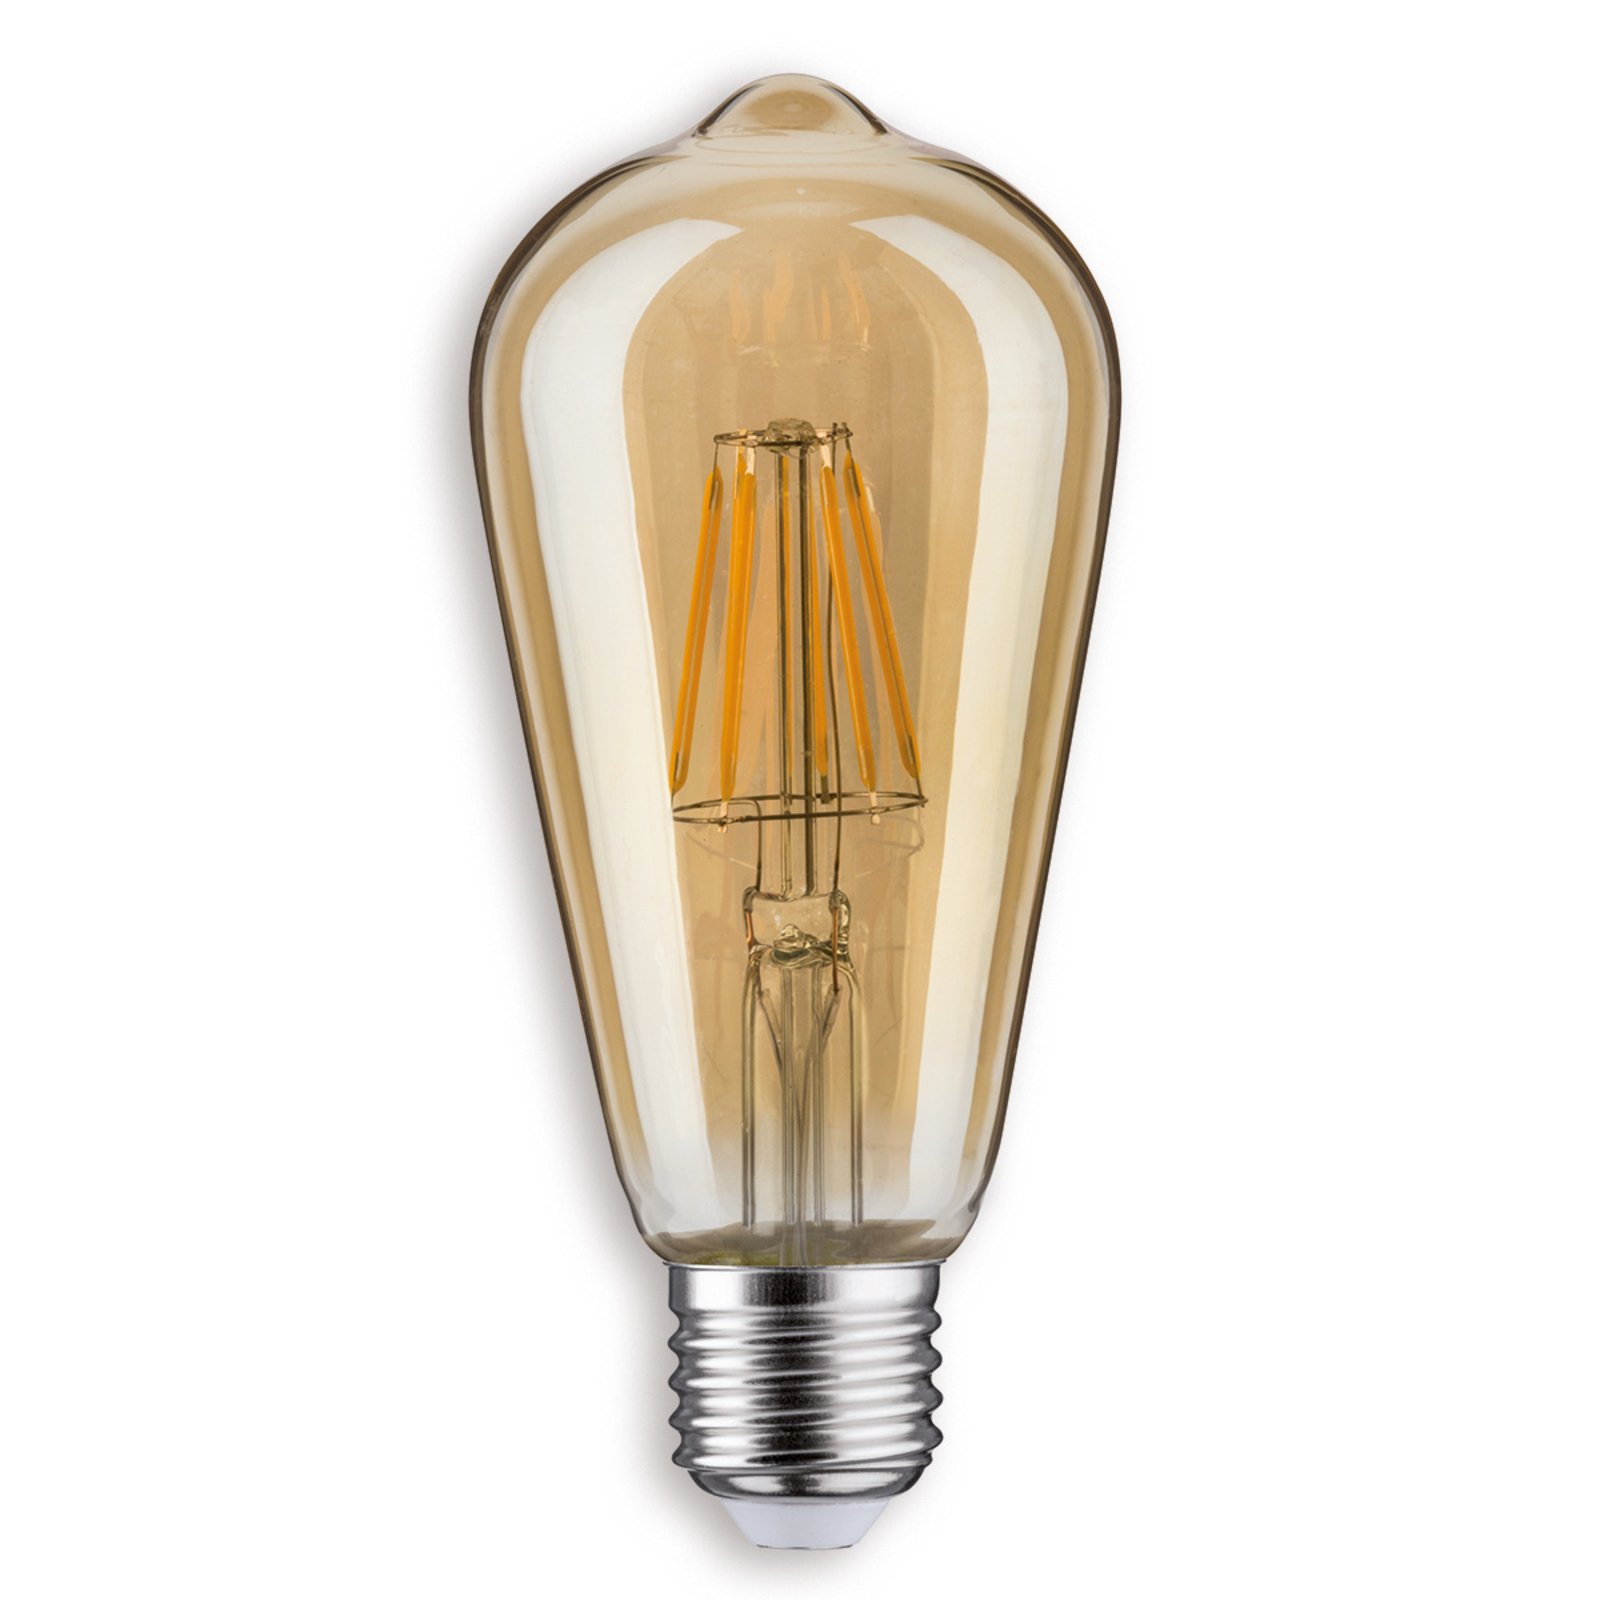 Paulmann E27 6.5 W 825 rustic LED bulb ST64 gold